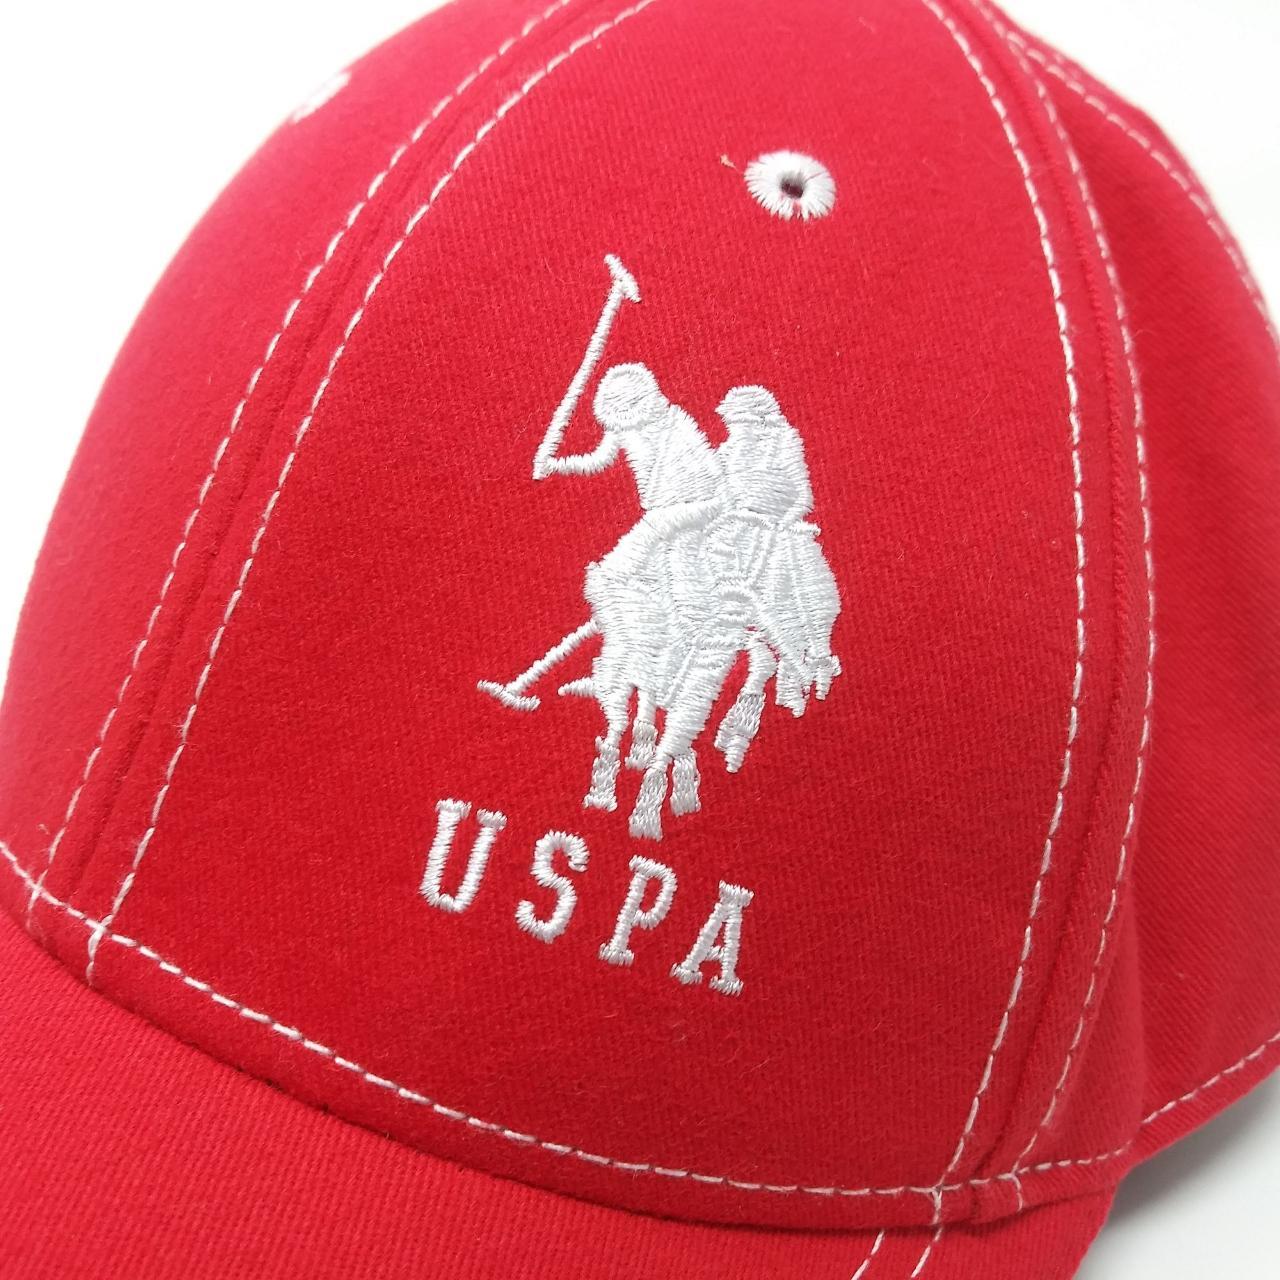 U.S. Polo Assn. Men's Red Hat (4)